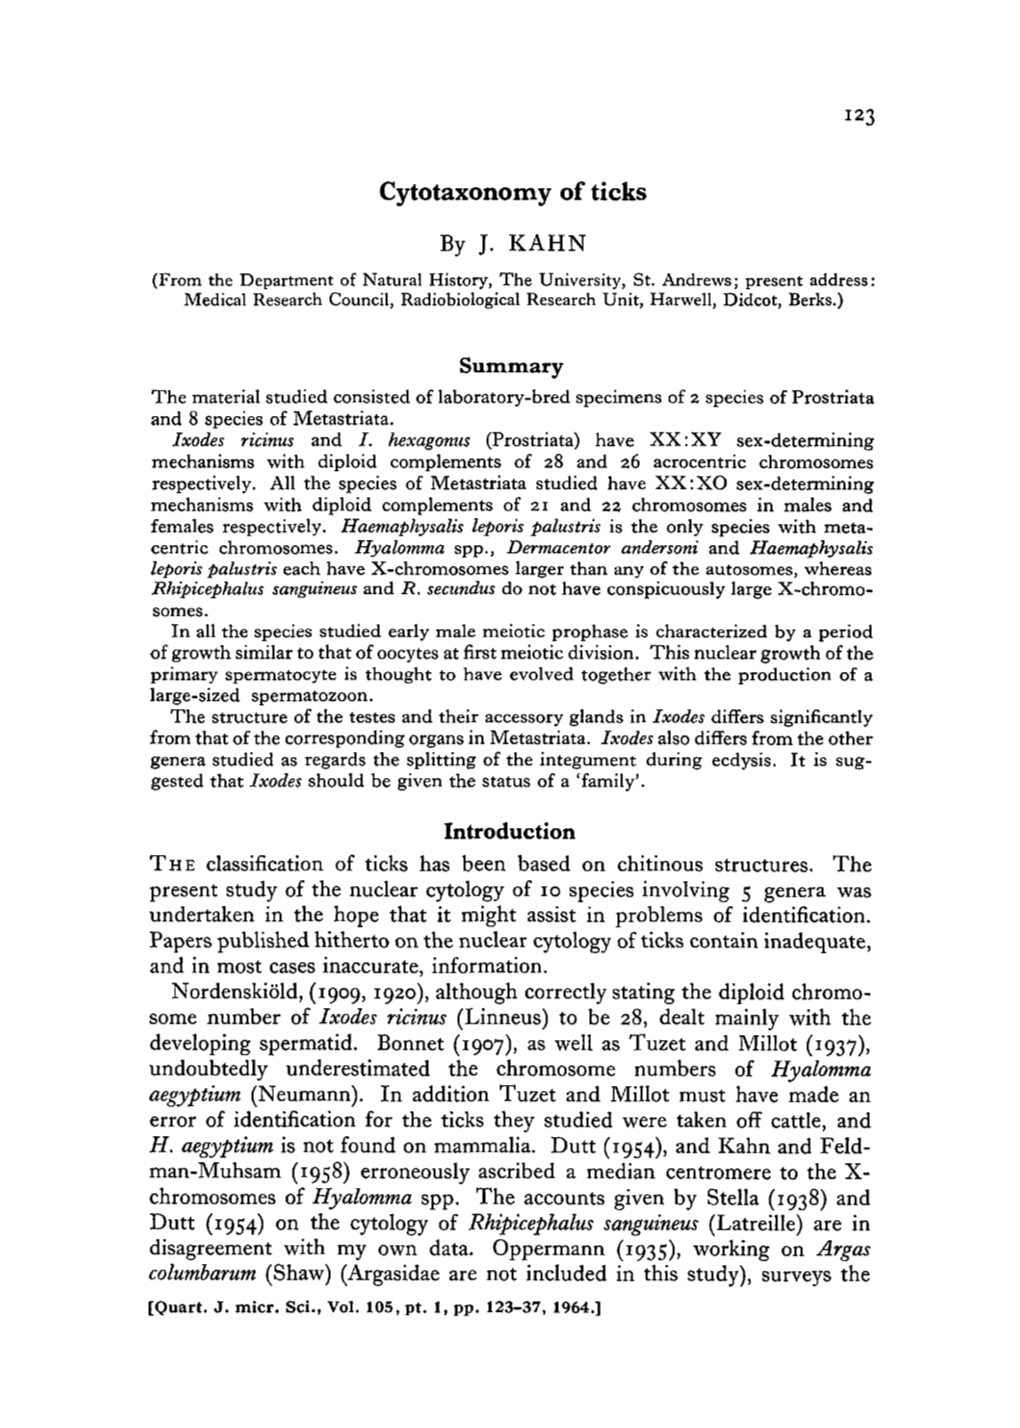 Cytotaxonomy of Ticks by J. KAHN Summary